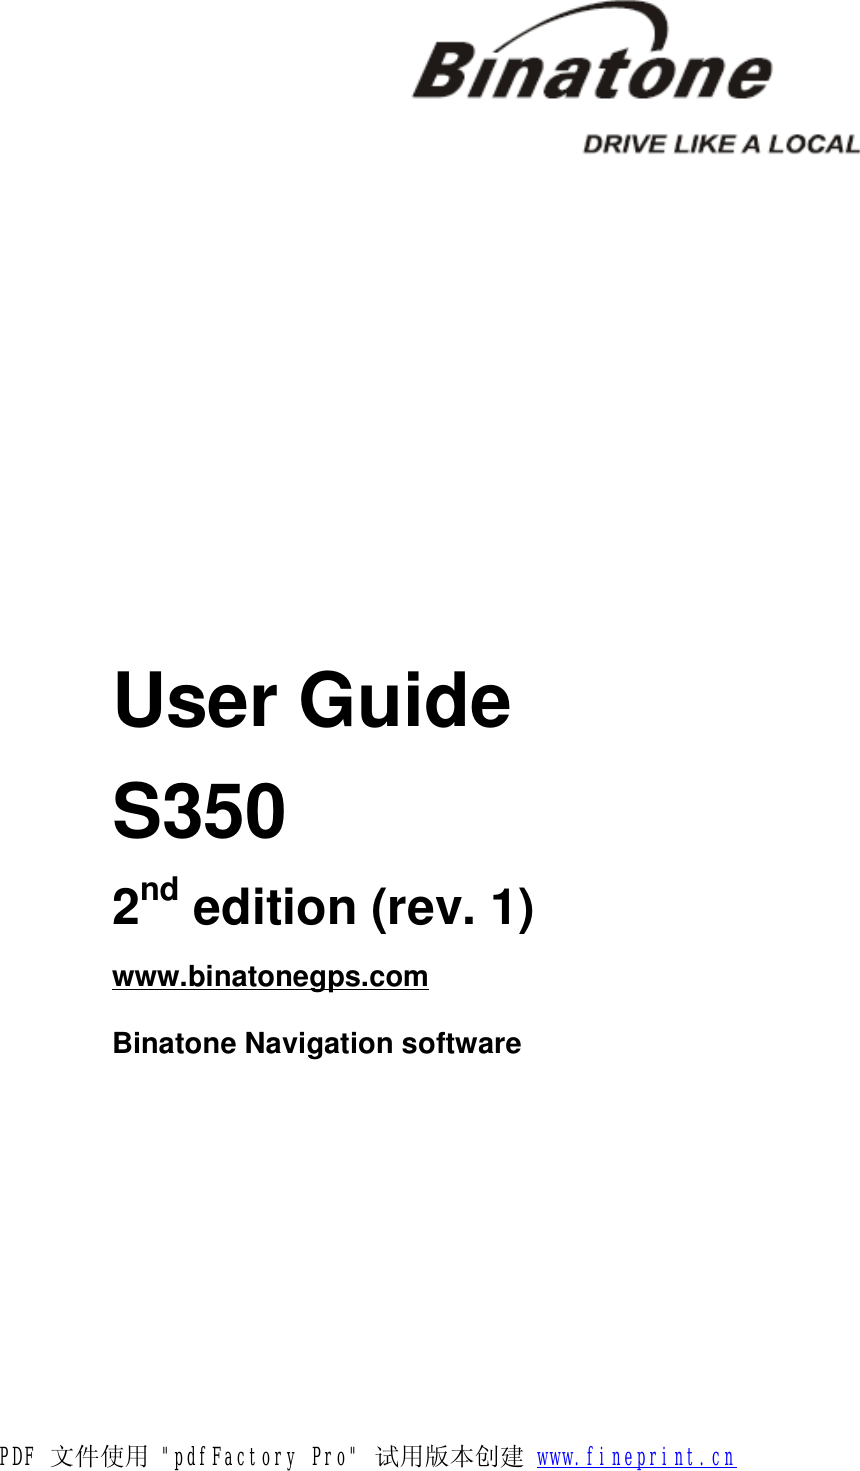                                                                  User Guide  S350  2nd edition (rev. 1)  www.binatonegps.com  Binatone Navigation software  PDF 文件使用 &quot;pdfFactory Pro&quot; 试用版本创建 www.fineprint.cn